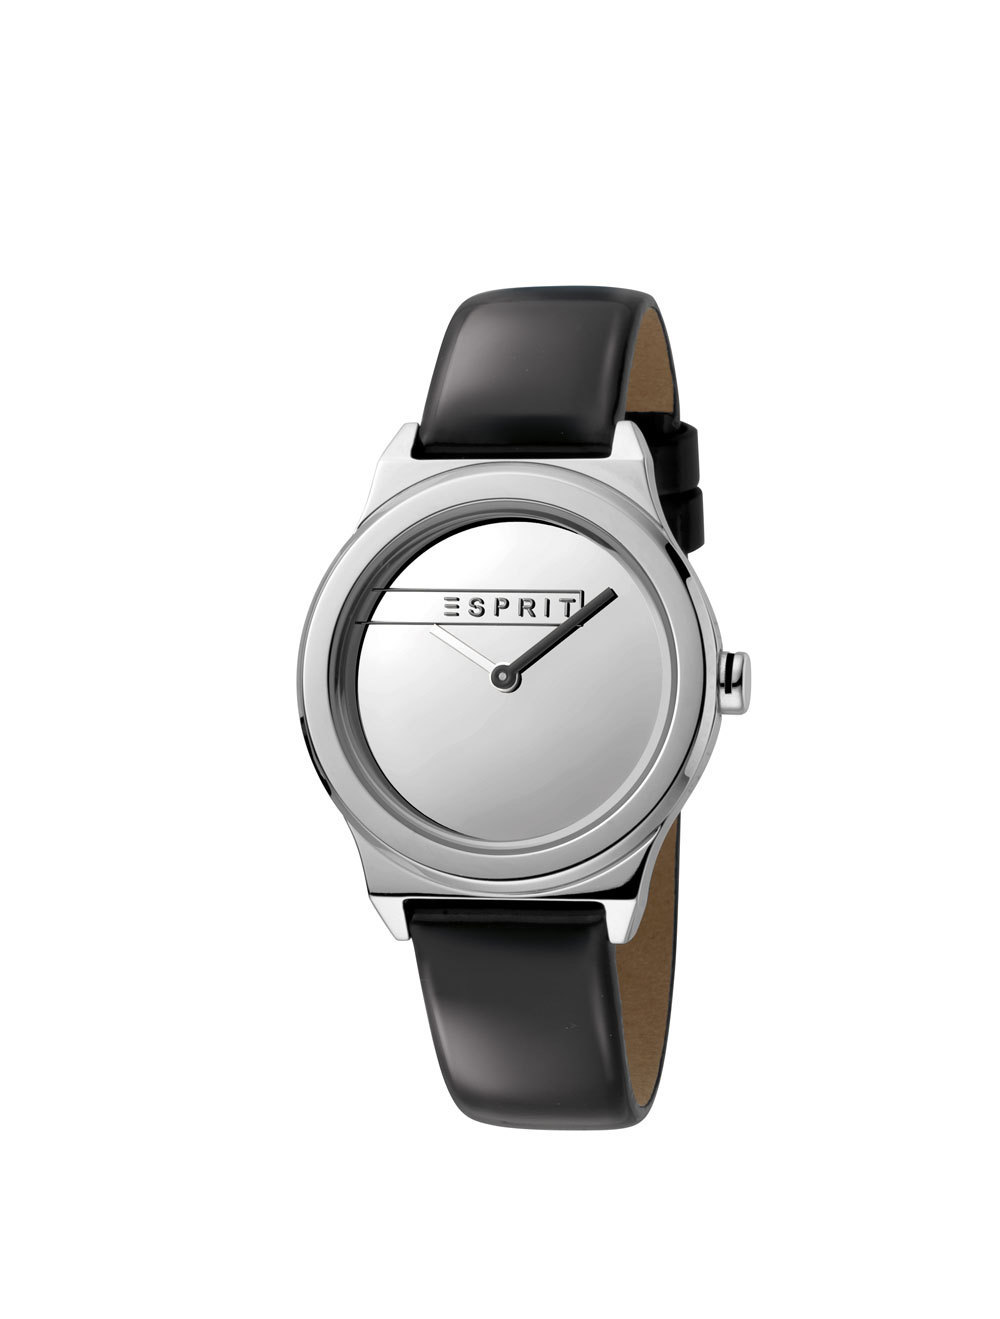 Esprit ES1L019L0015 Magnolia Silver Black Patent horloge